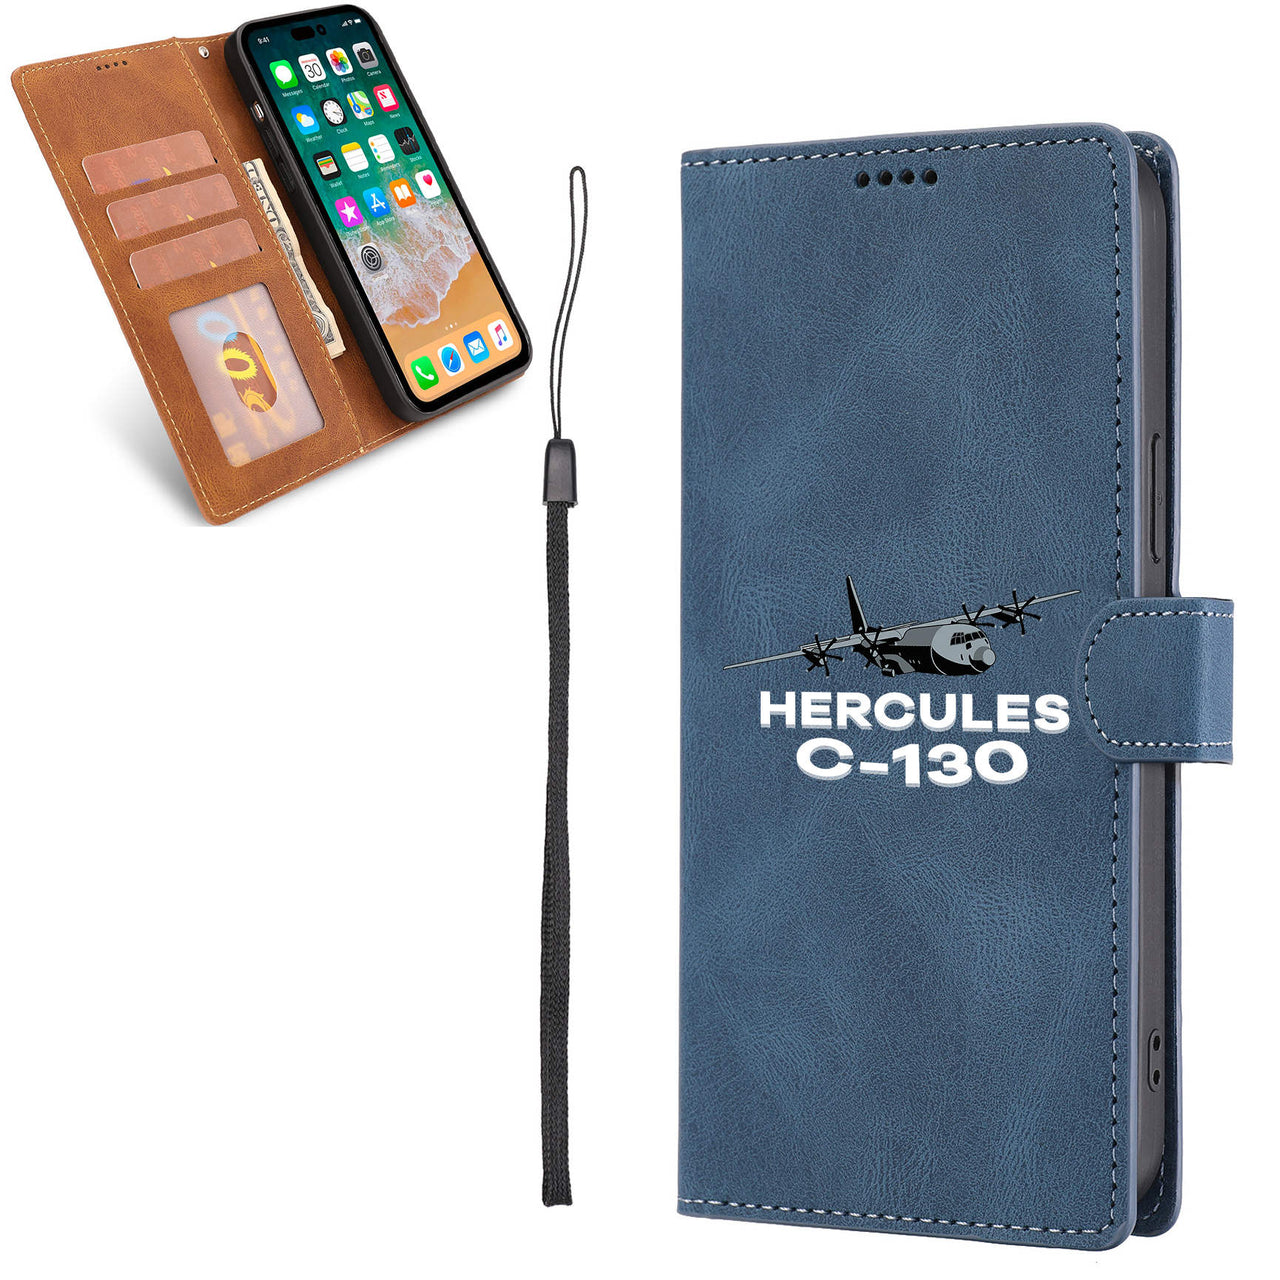 The Hercules C130 Designed Leather iPhone Cases